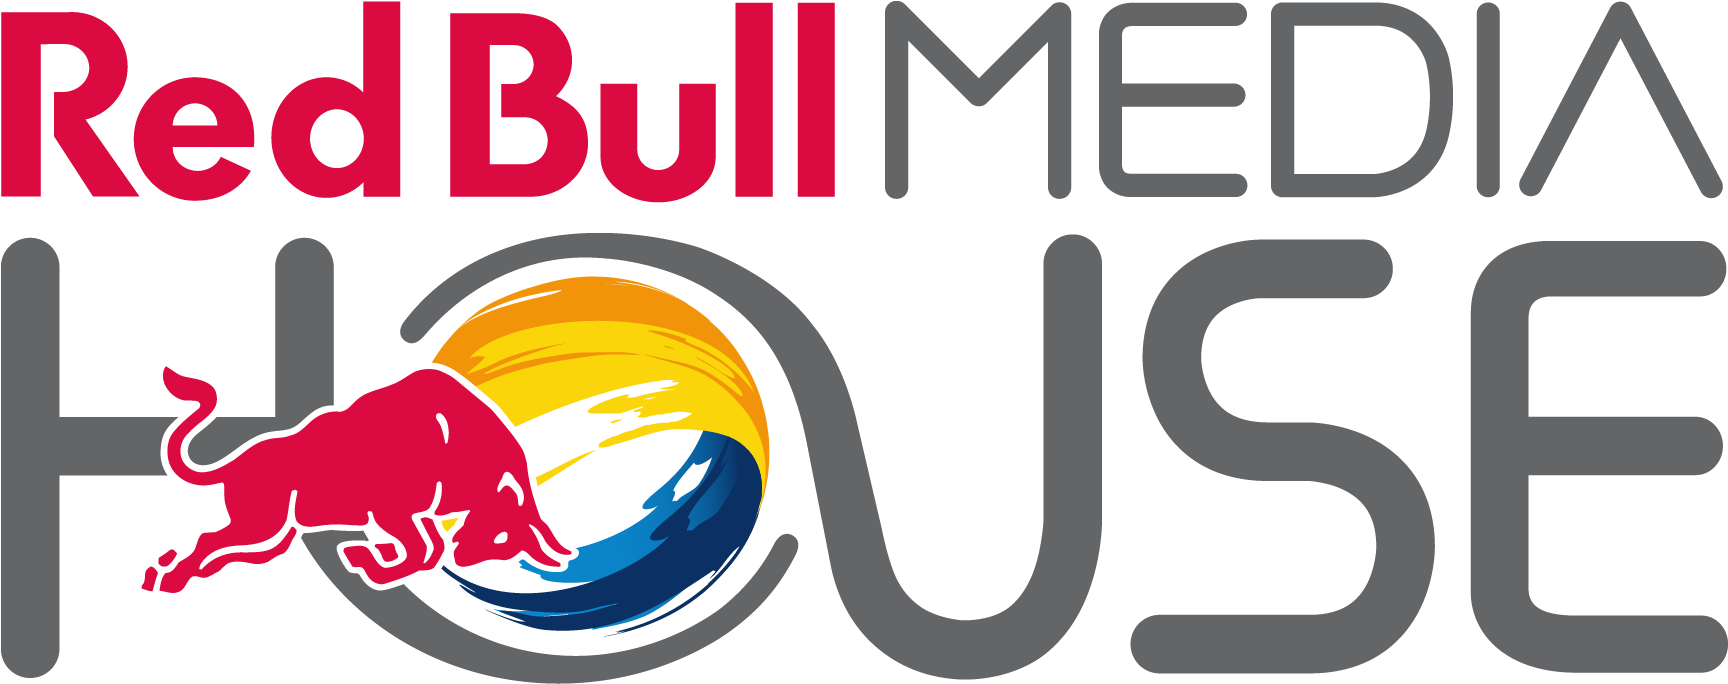 Red Bull Logo Png 1728 X 684